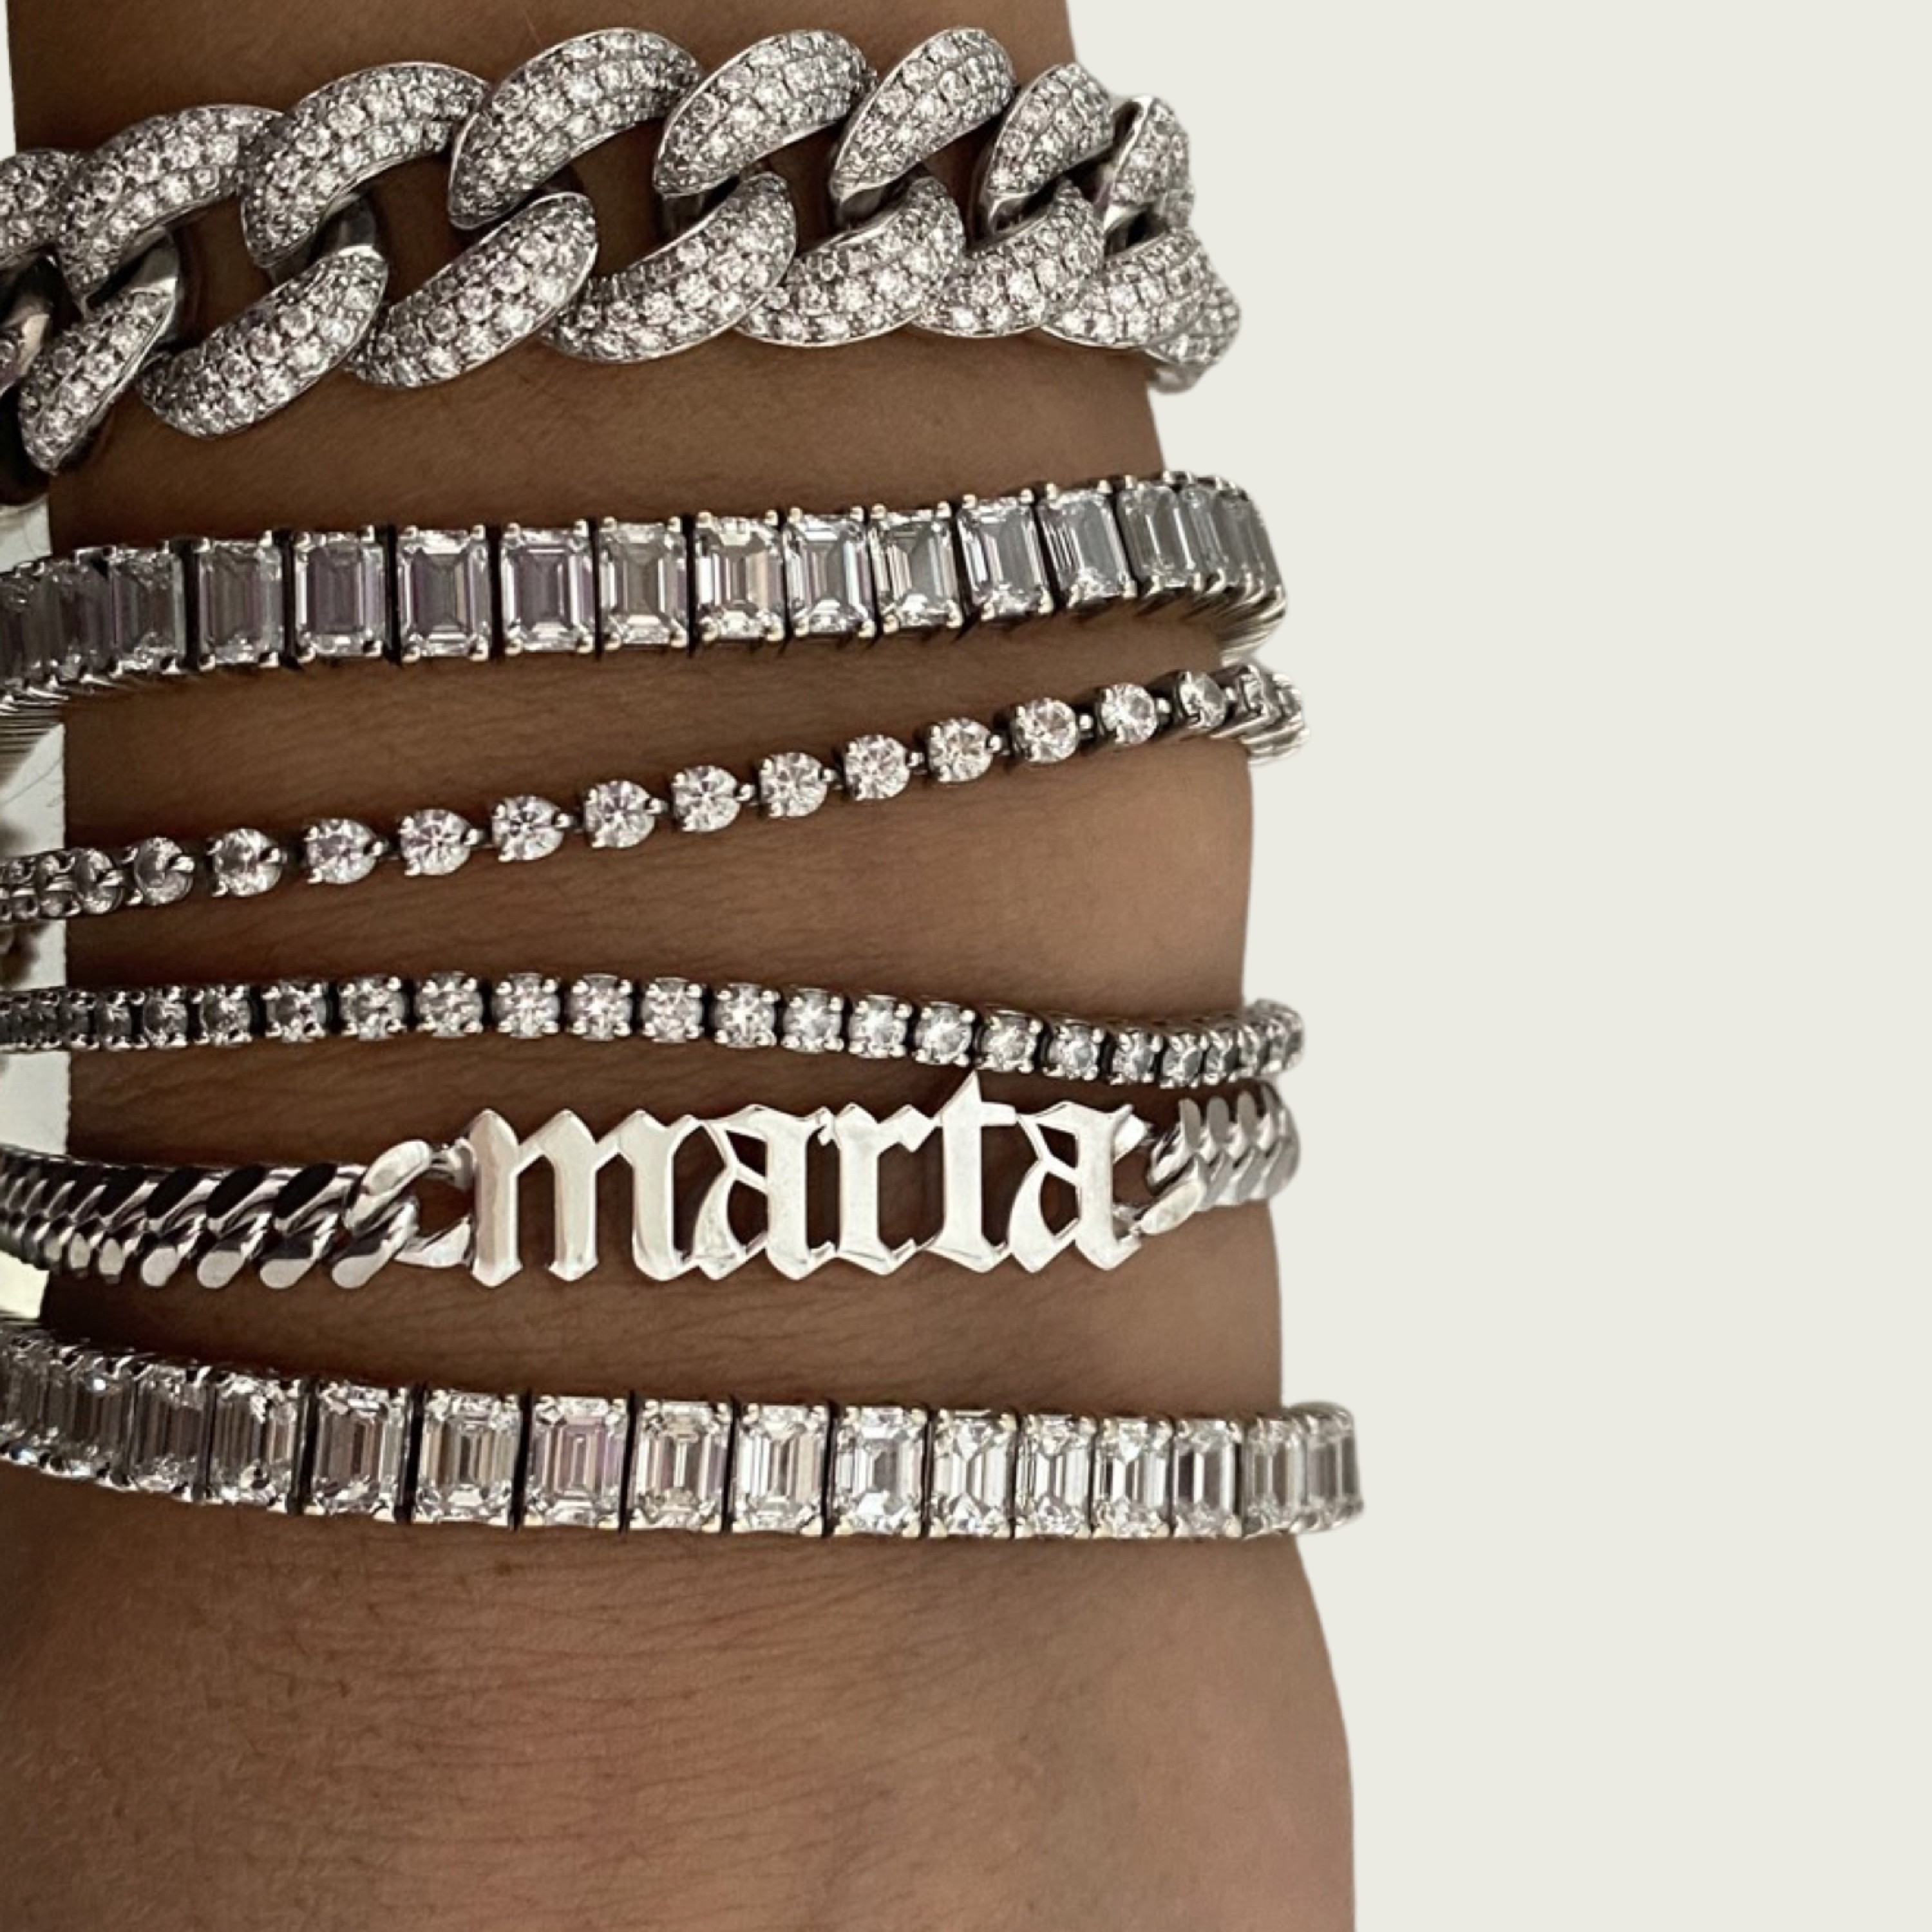 14K White Gold Ruby and Diamond Tennis Bracelet, Best Jewelry Miami -  Snow's Jewelers Miami Lakes